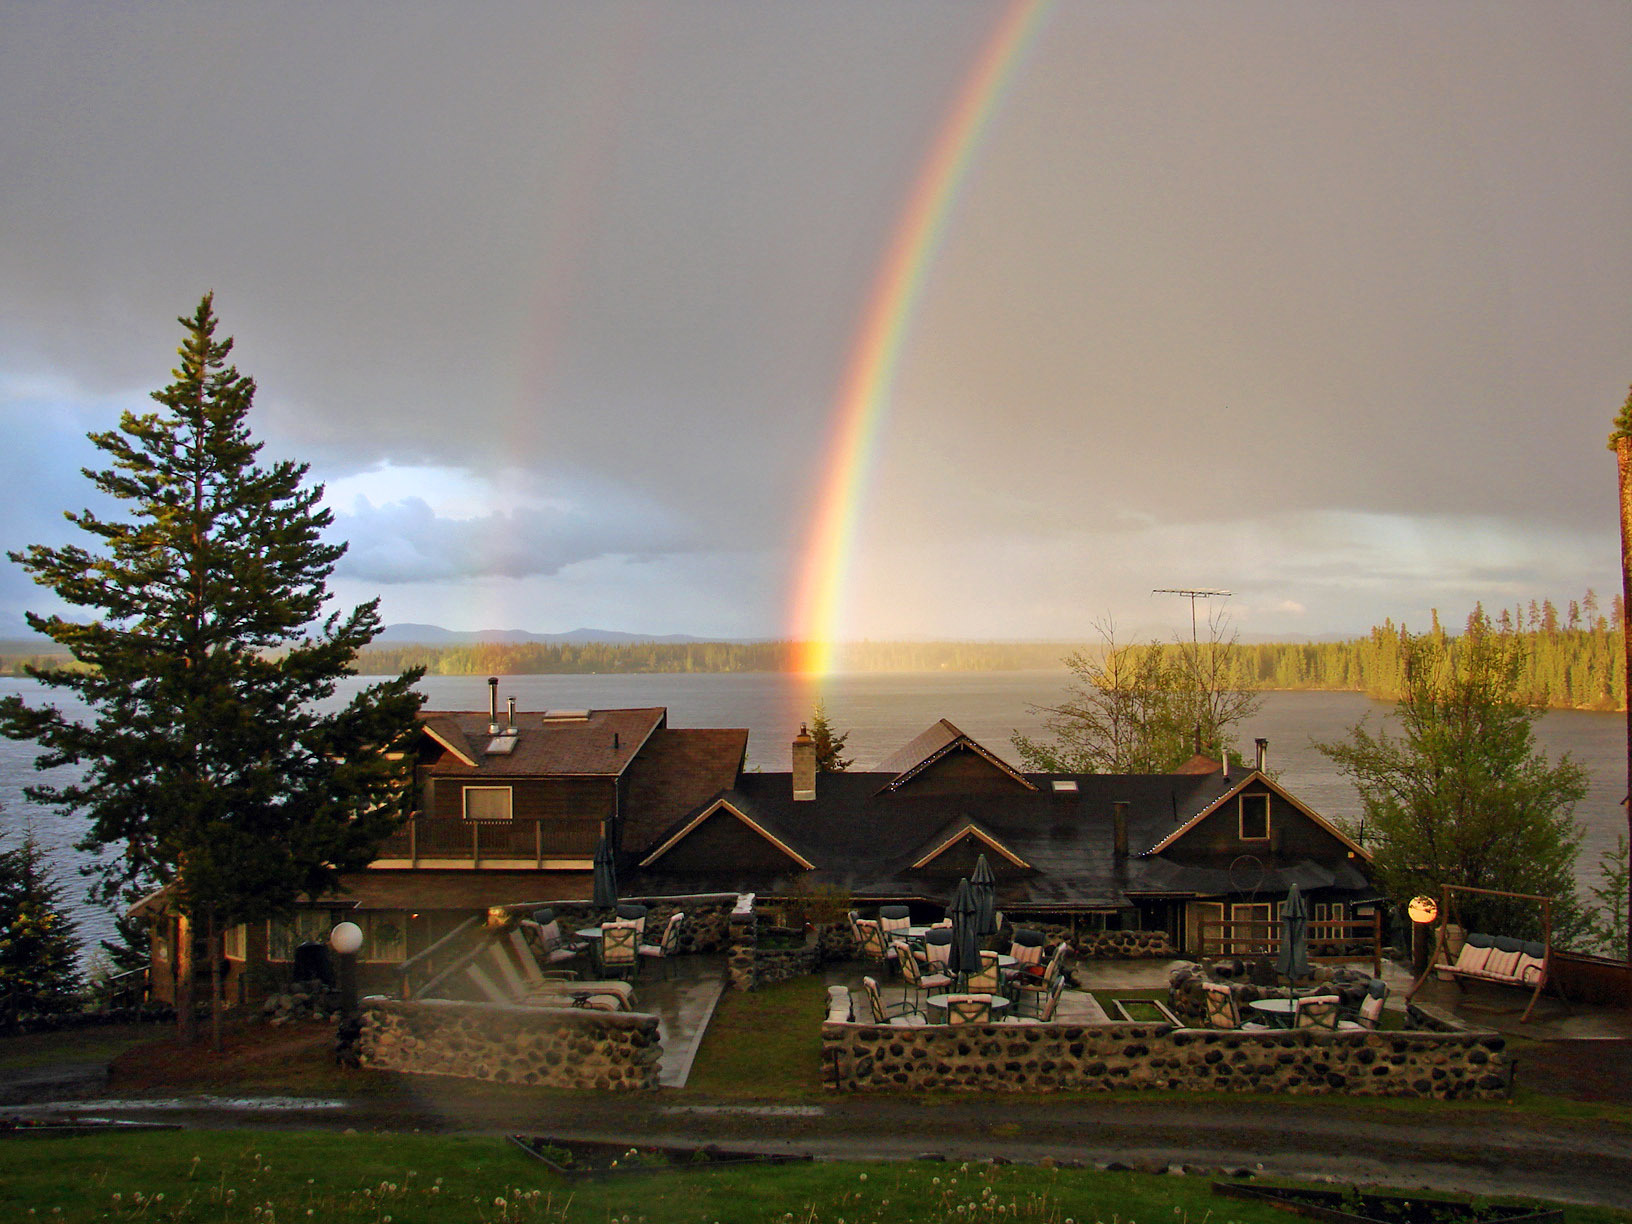 A rainbow over the lodge